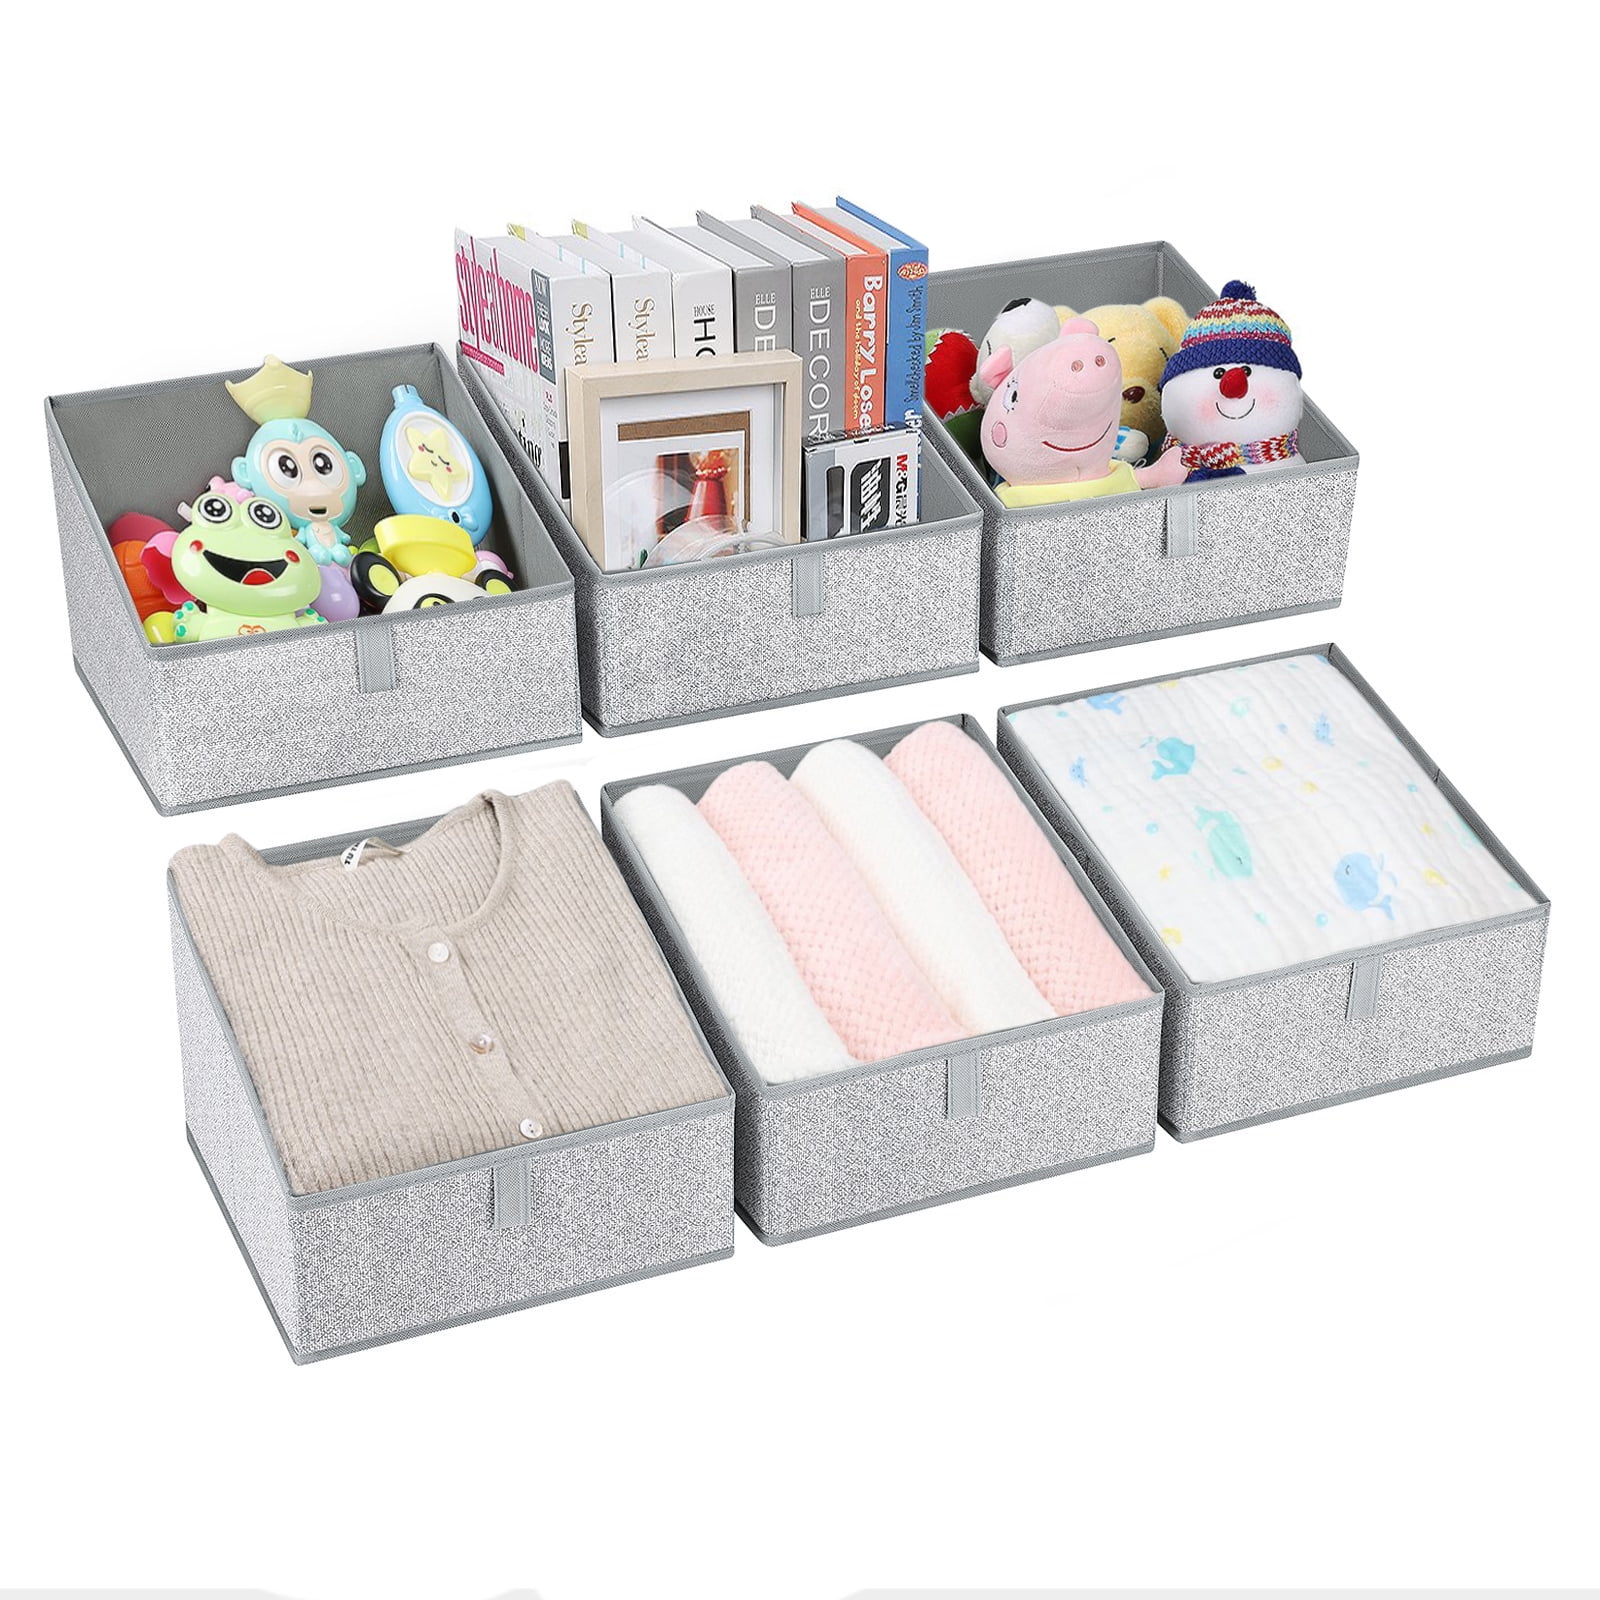 DIMJ Storage Bins, 6 Pcs Trapezoid Closet Storage Baskets for Shelves  Fabric Storage Box, Open Storage Cubes for Clothes Jeans Books Toys Office